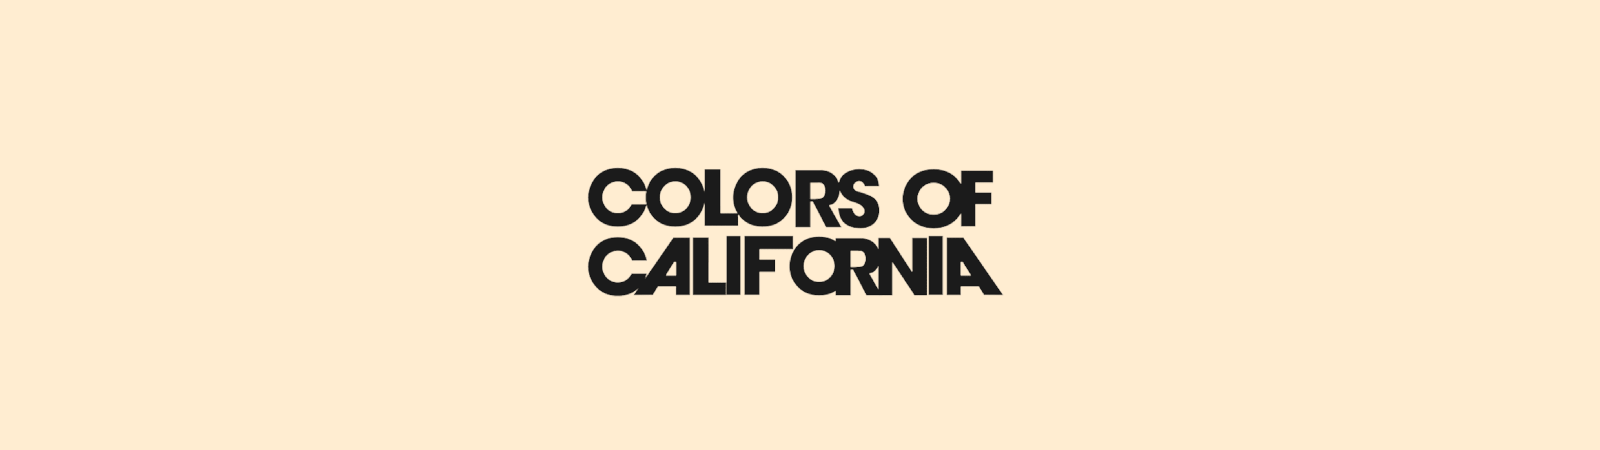 Colors of California Kinderschuhe online kaufen im Prange Shop